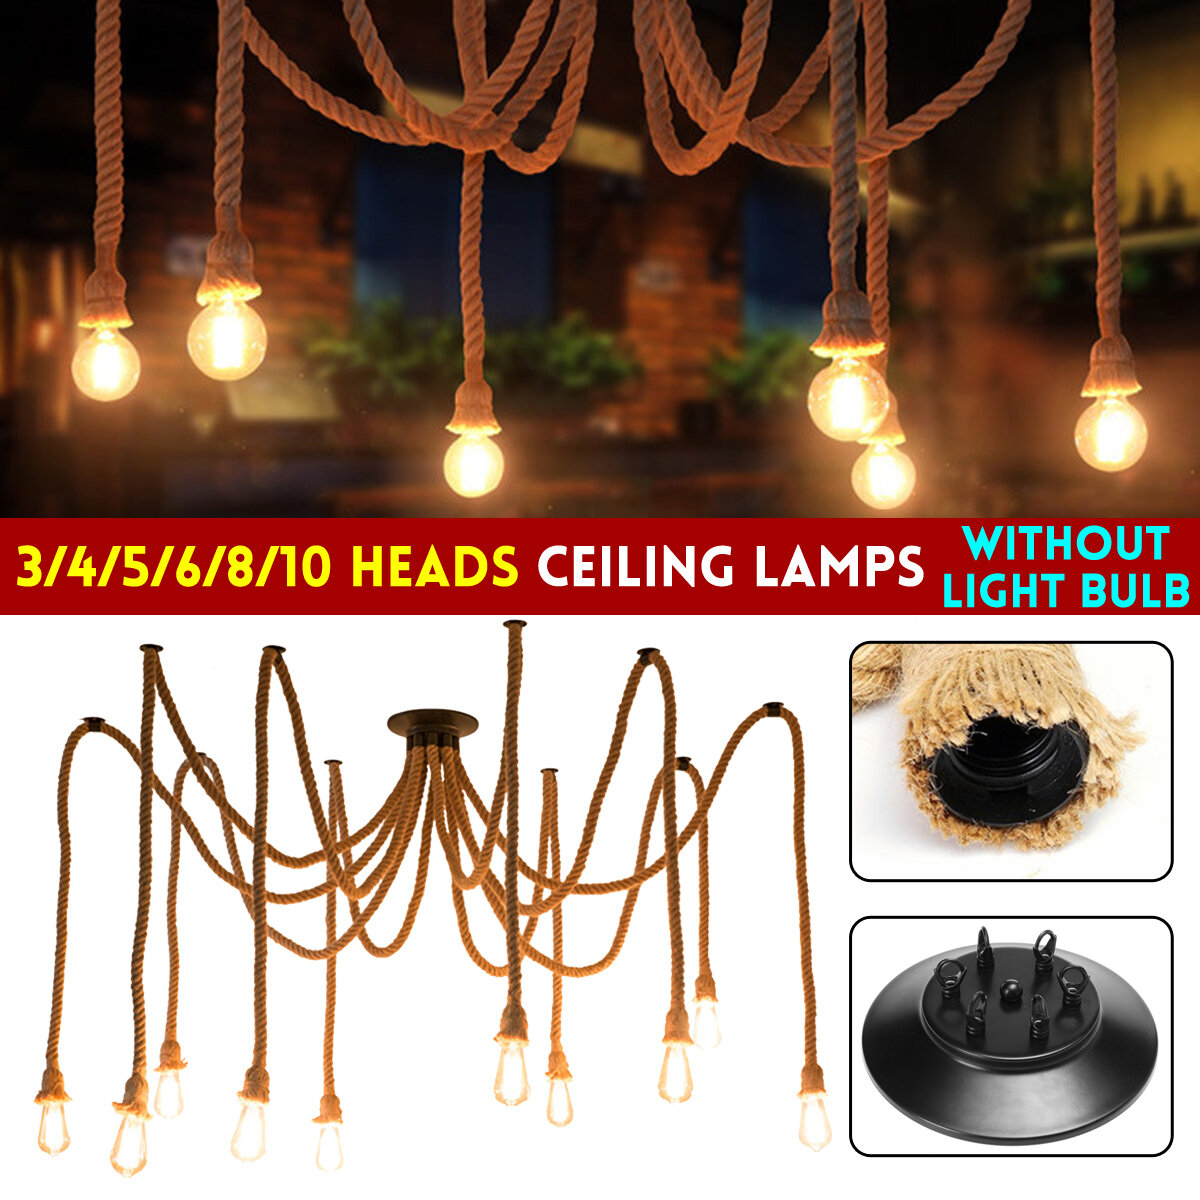 1.5M 3/4/5/6/8/10 Heads Industrial Hemp Rope Chandelier Ceiling Pendant Light E27 Lampholder Light Fixture AC110-220V